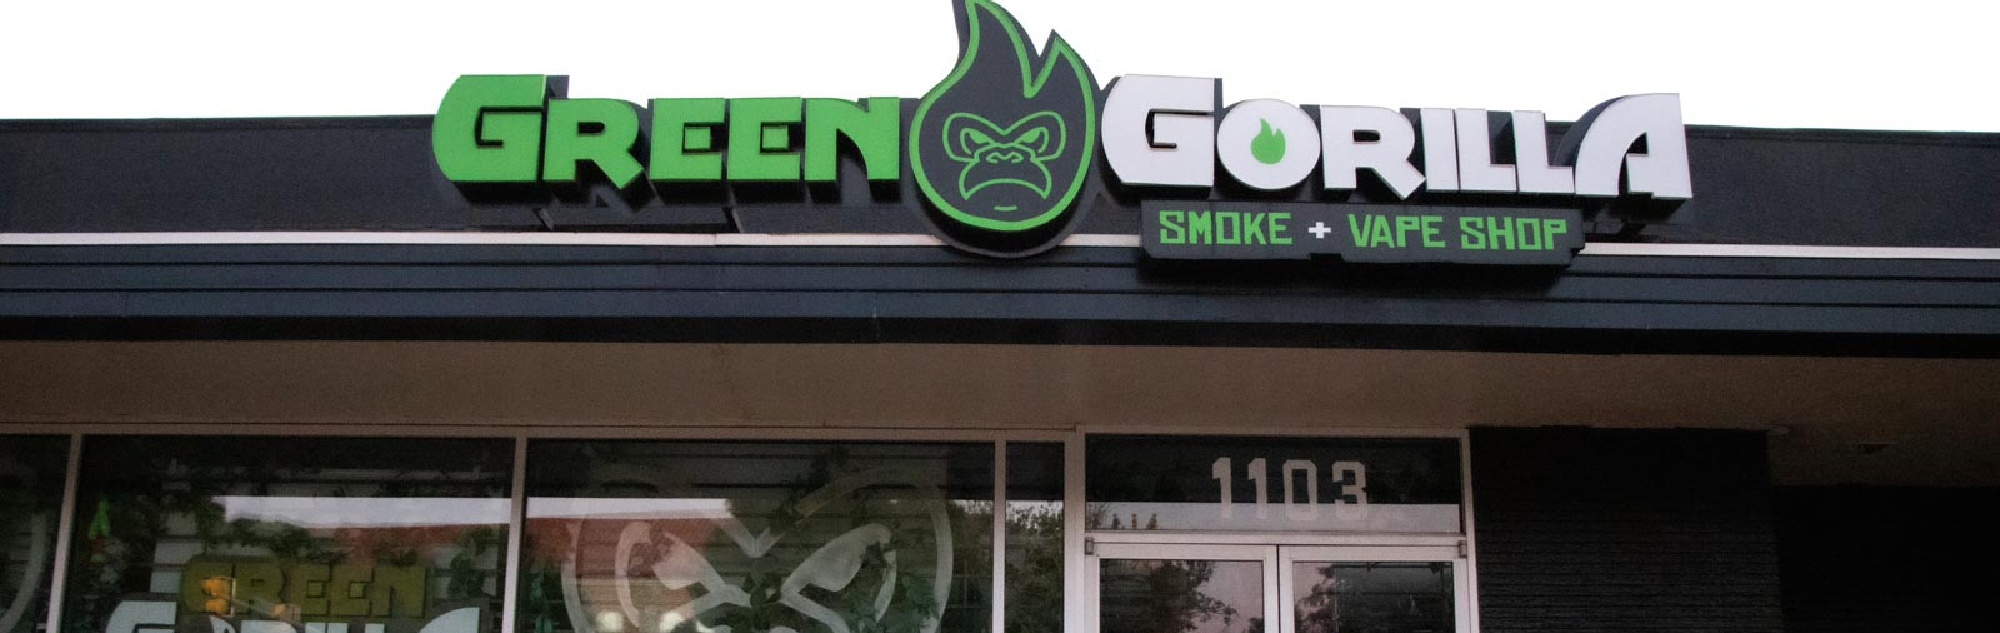 image of green gorilla smoke & vape shop in lubbock texas 